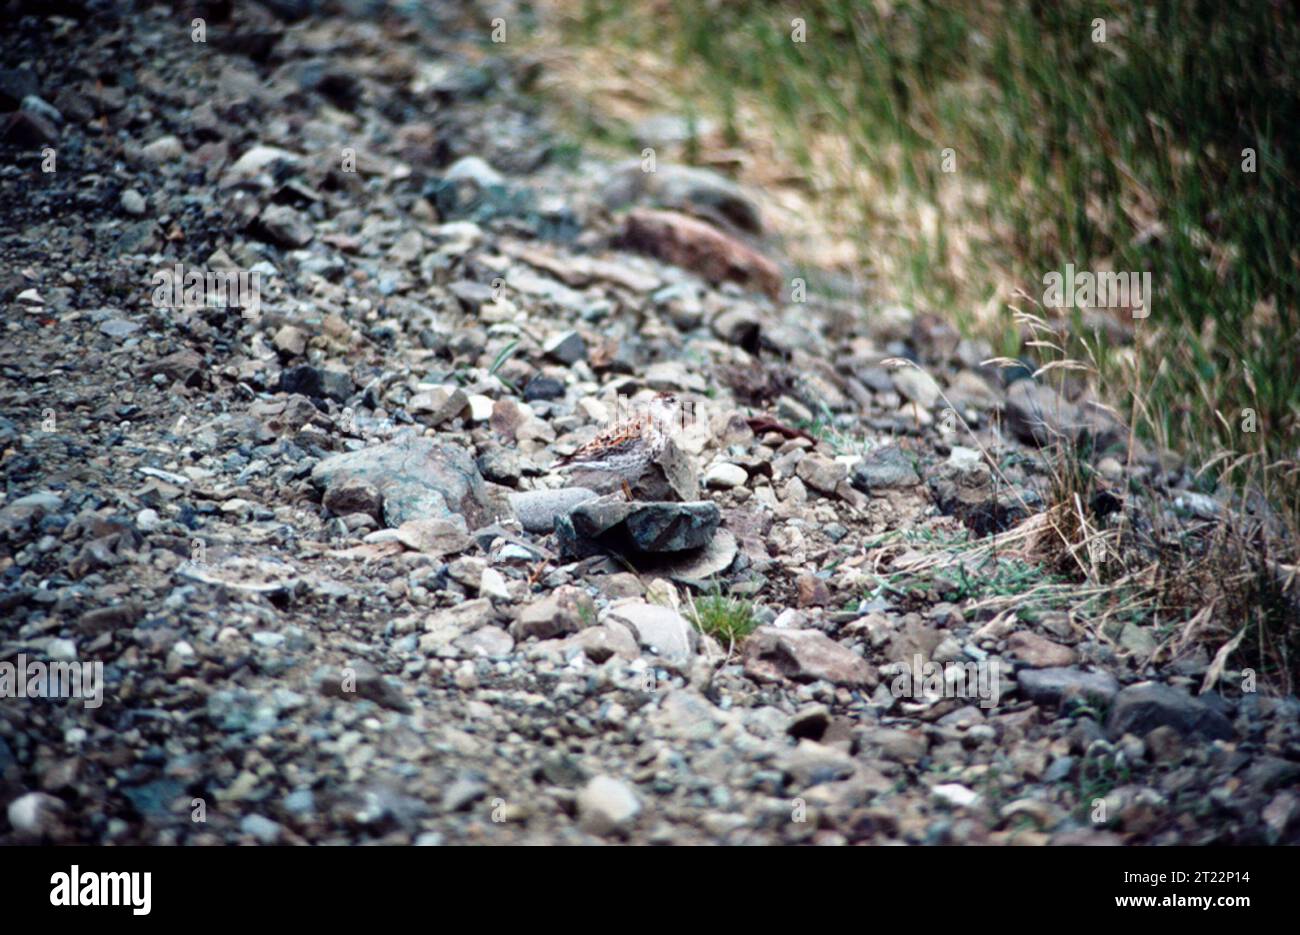 Calidris ptilocnemis. Creator: Rhode, Elaine B. Subjects: Birds; Shorebirds; Alaska Maritime National Wildlife Refuge; Aleutians; Rat Islands; Amchitka Island.  . 1998 - 2011. Stock Photo